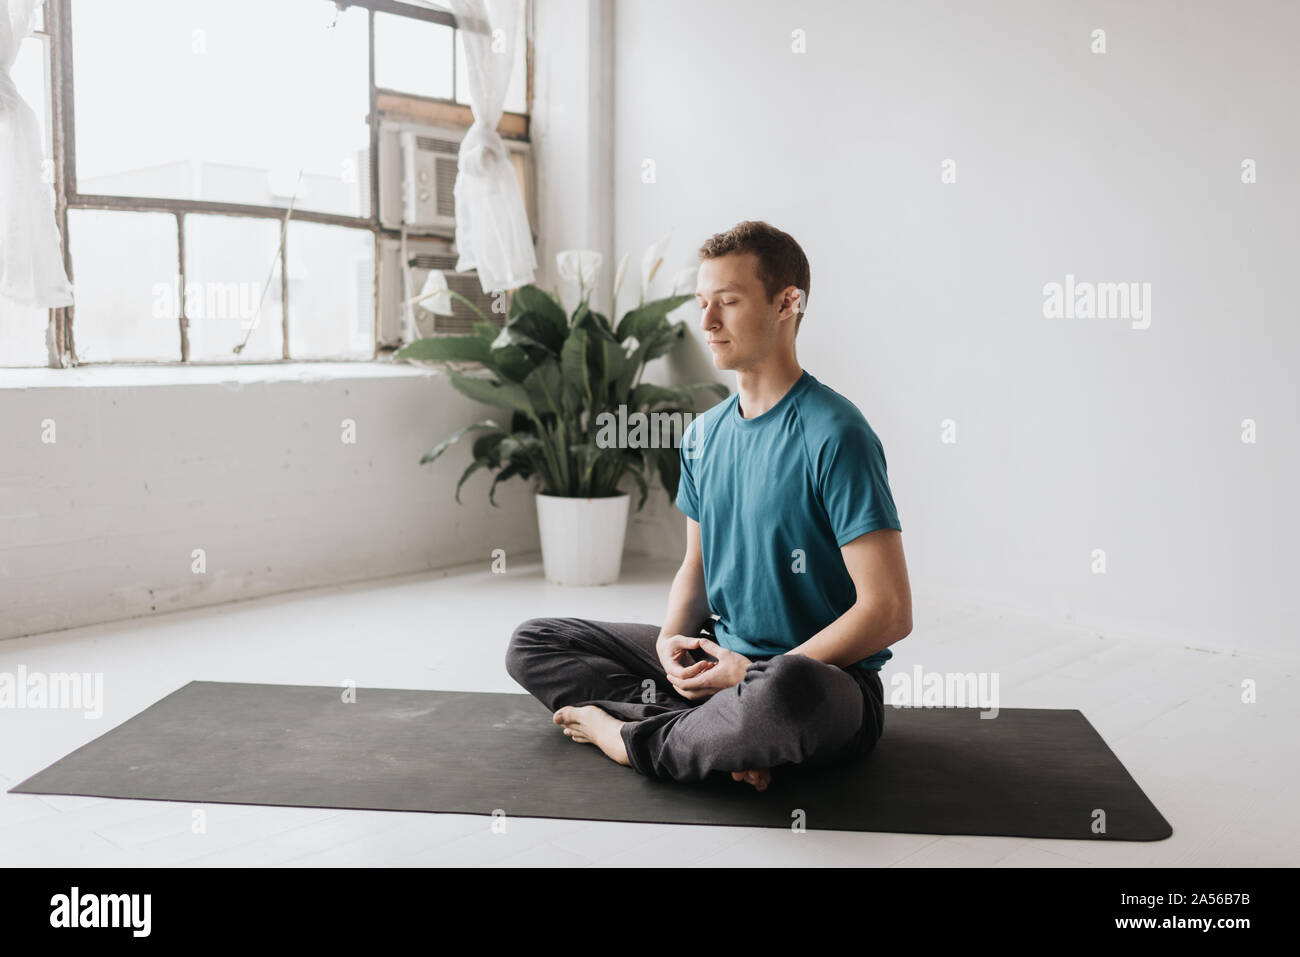 Man sitting in lotus pose in yoga studio Stock Photo